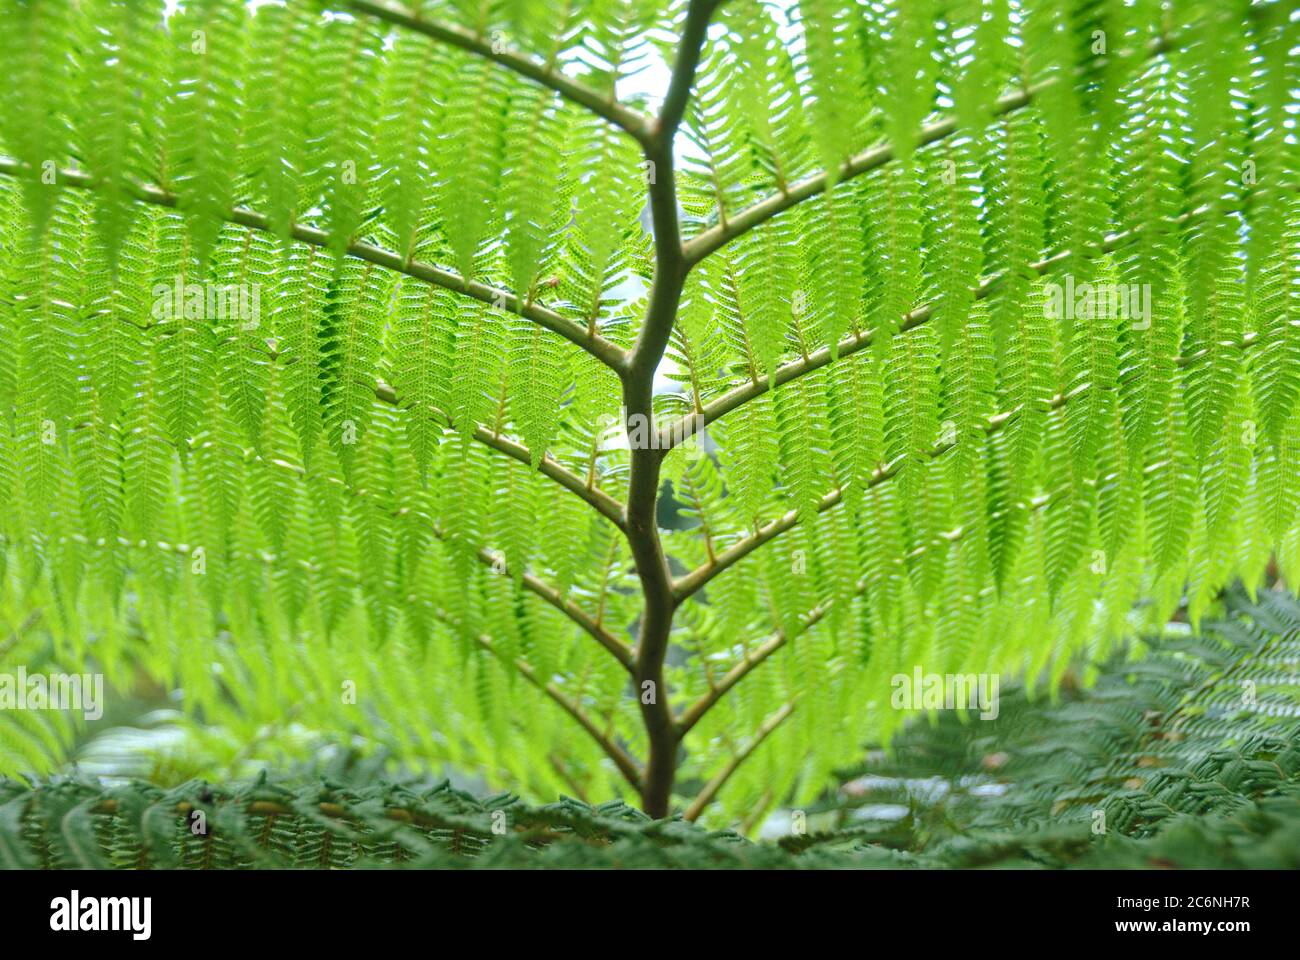 Schuppen-Baumfarn Cyathea cooperi, Dandruff tree fern Cyathea cooperi Stock Photo